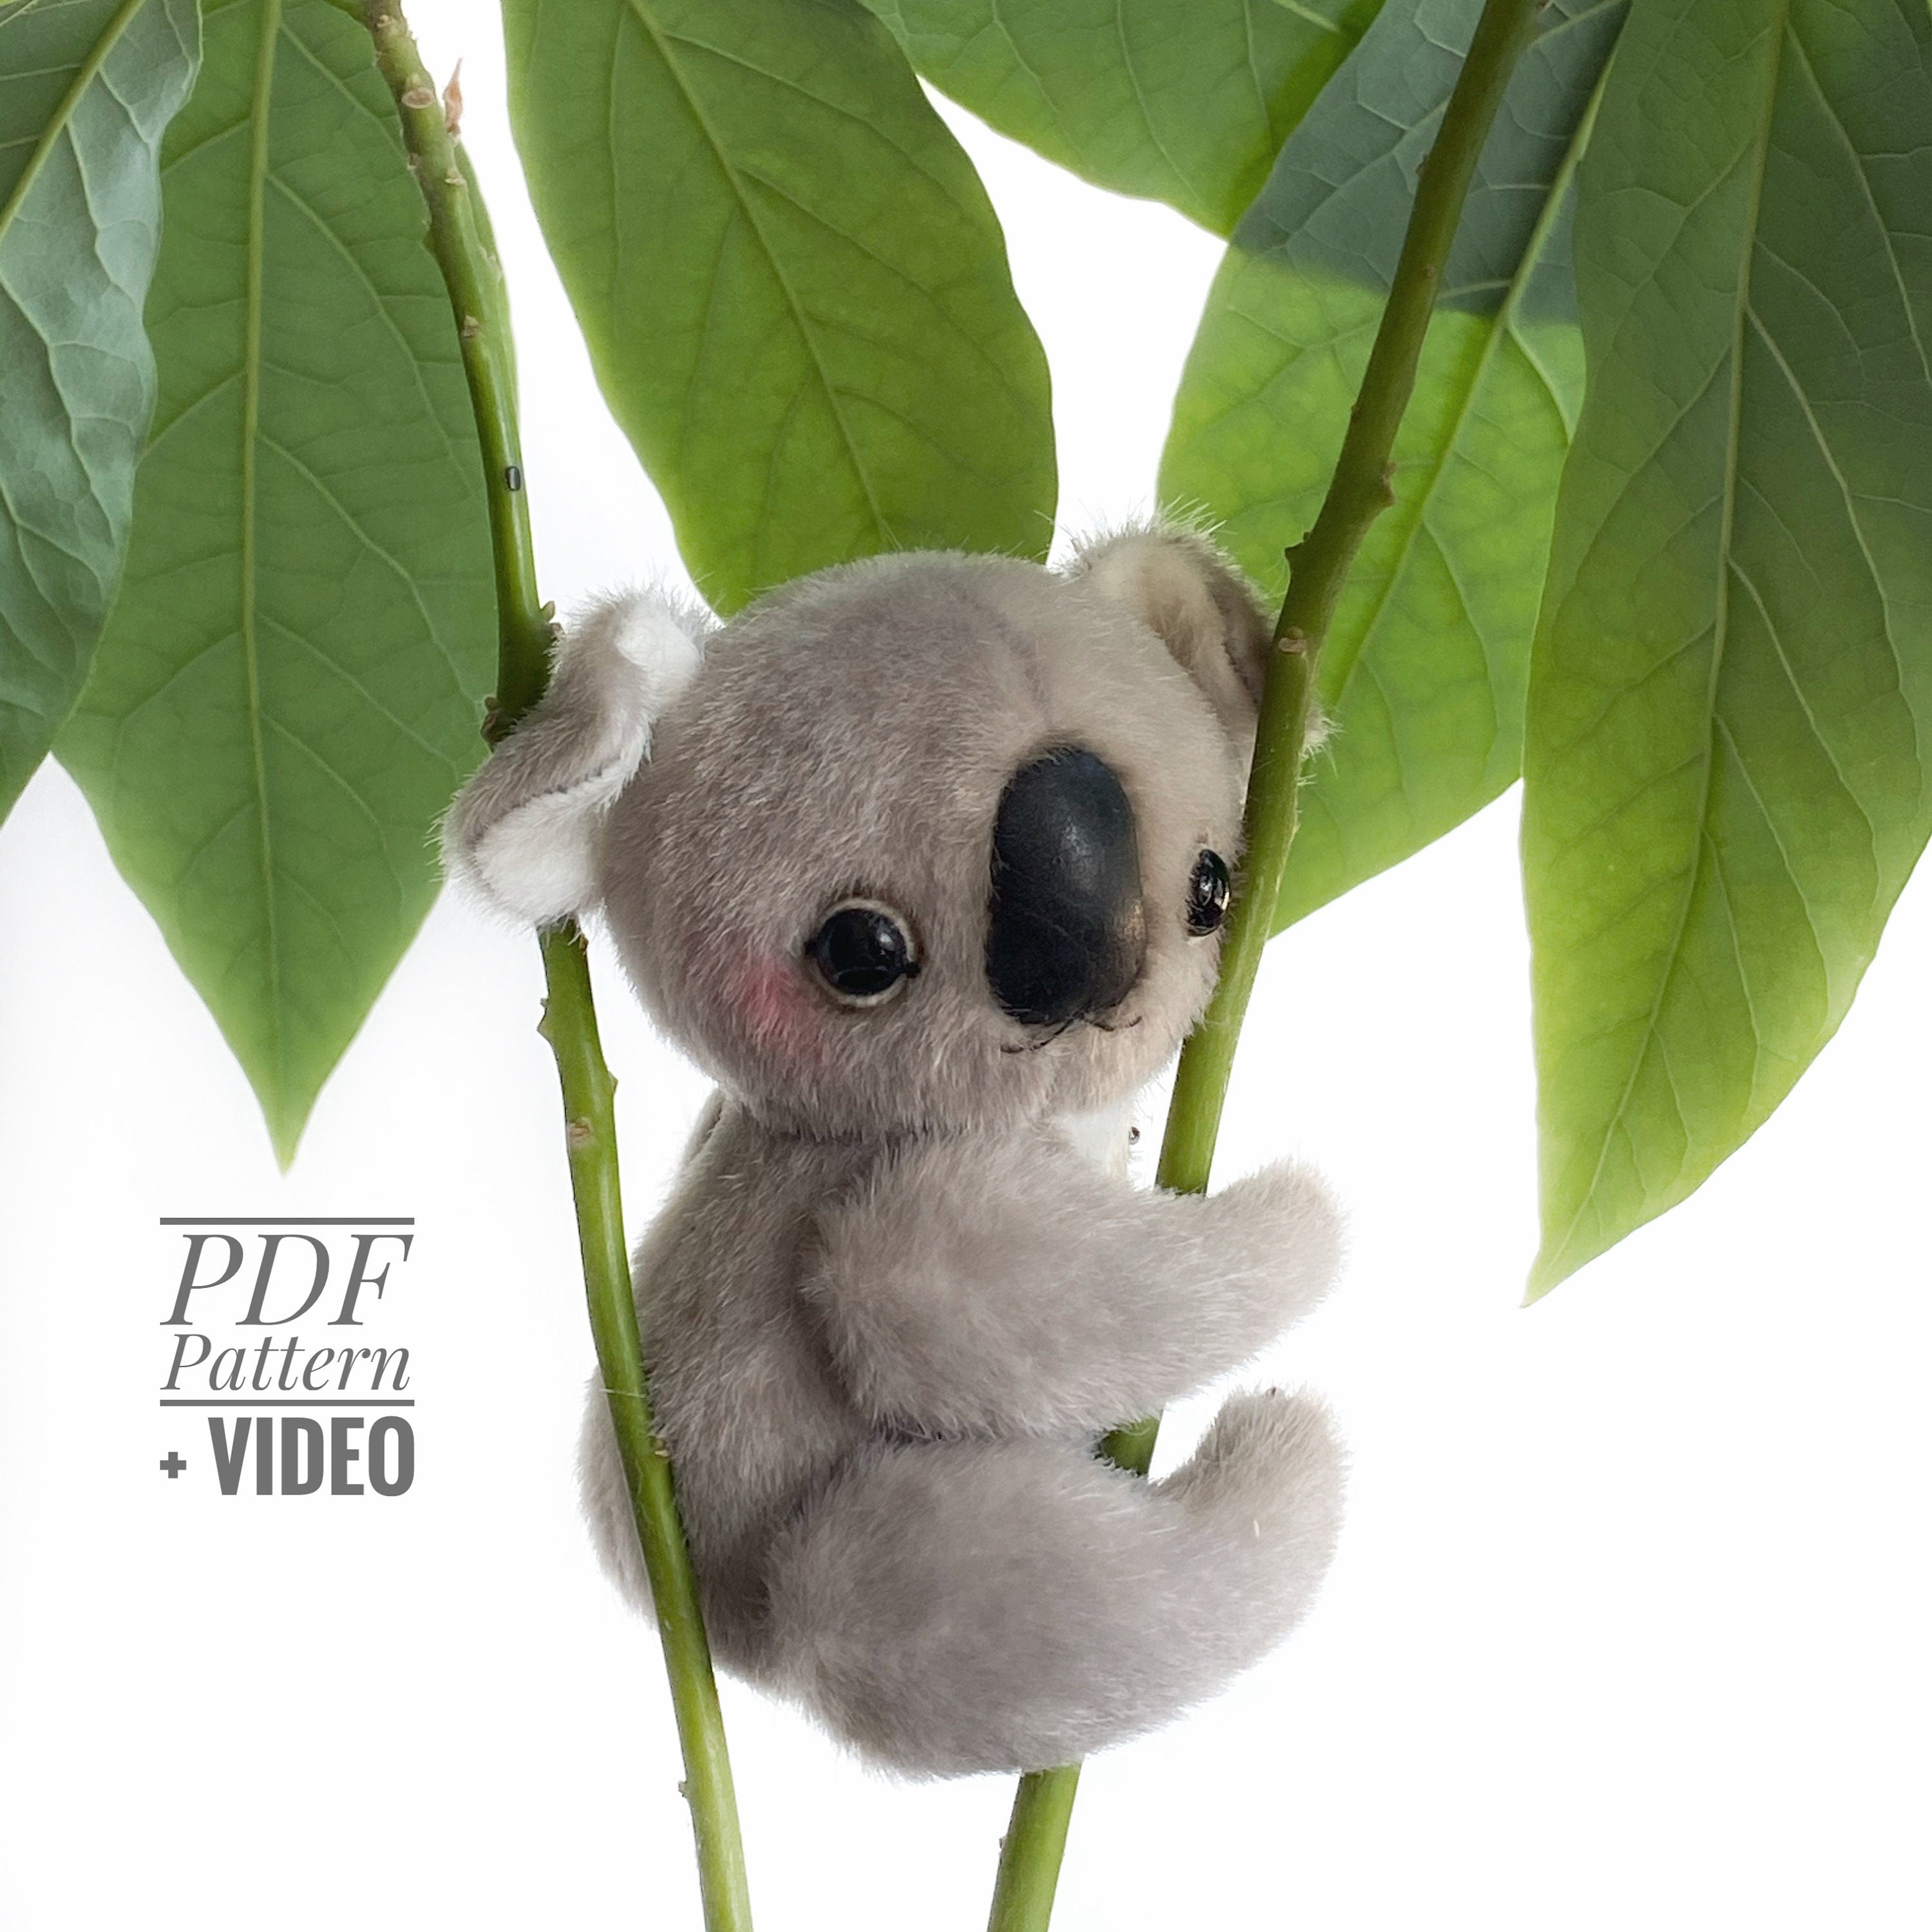 4 in 1 PATTERN Australia animals Koala Kiwi Bird Kangaroo Platypus PDF sewing patterns Video tutorial DIY stuffed toy pattern easy to sew